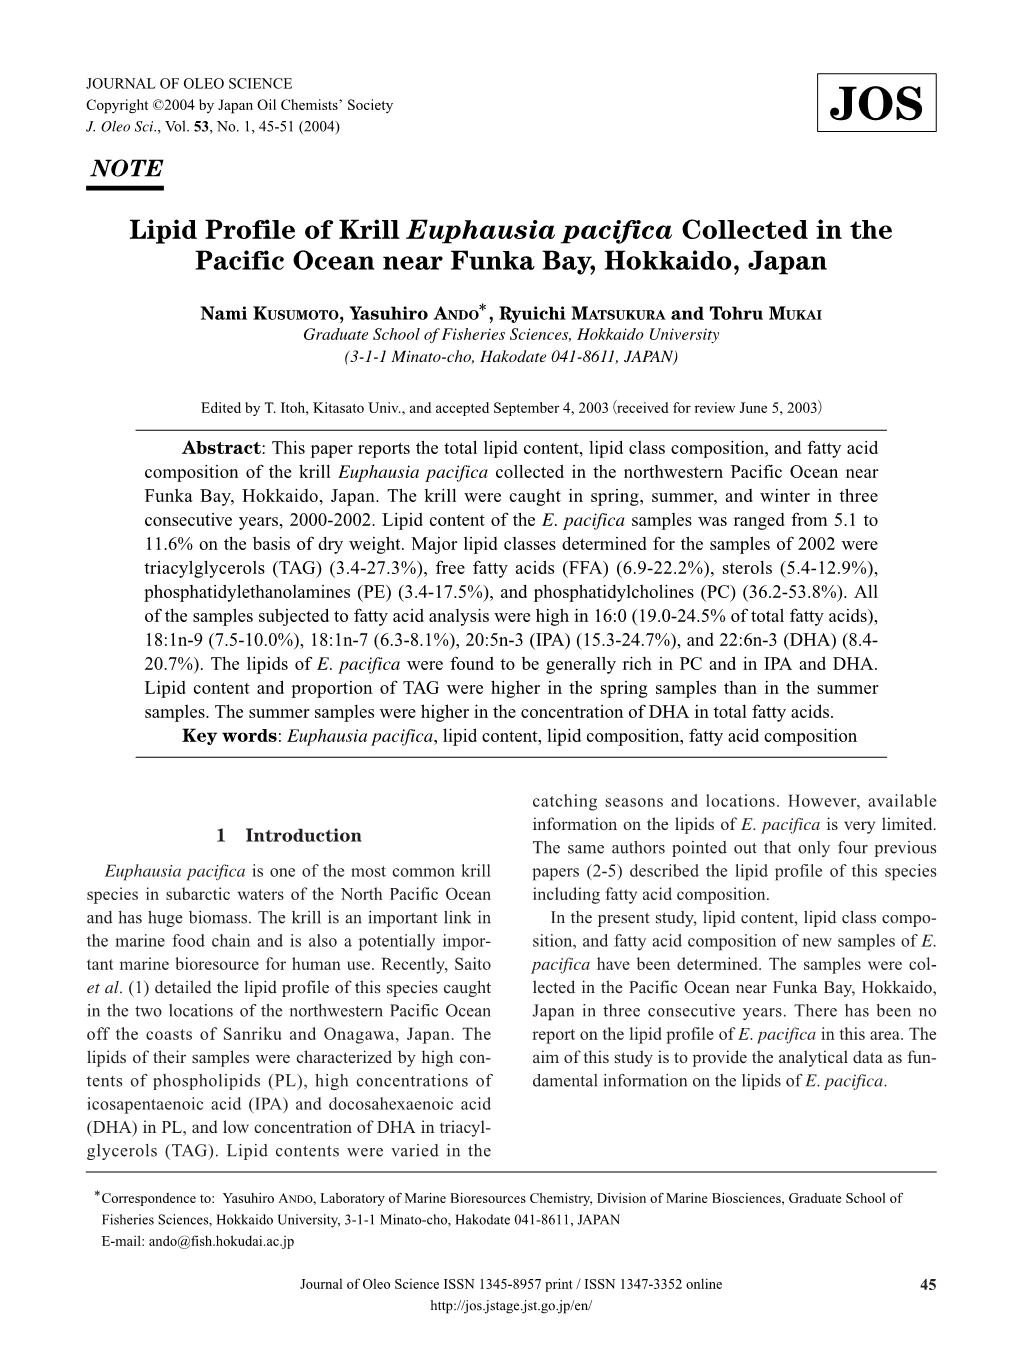 Lipid Profile of Krill Euphausia Pacifica Collected in the Pacific Ocean Near Funka Bay, Hokkaido, Japan